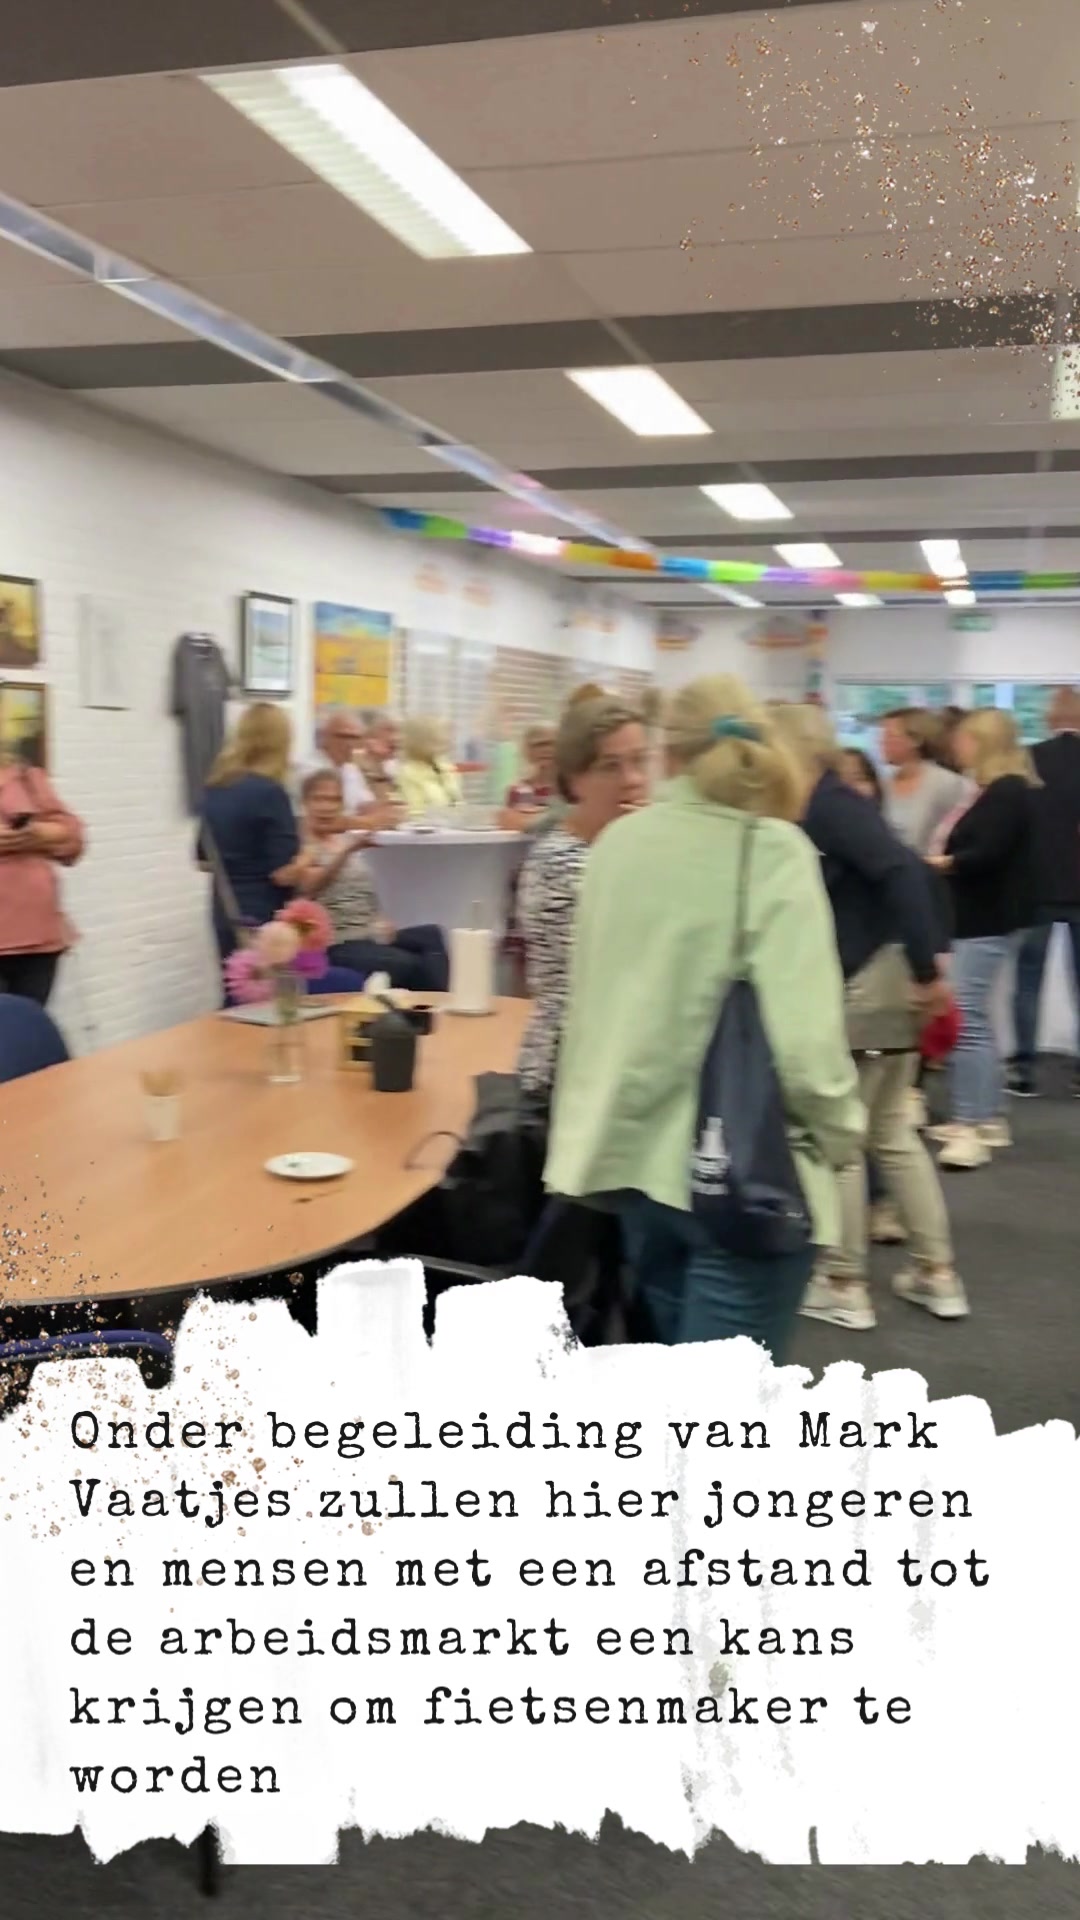 A post from Vrijwilligerspunt Winterswijk